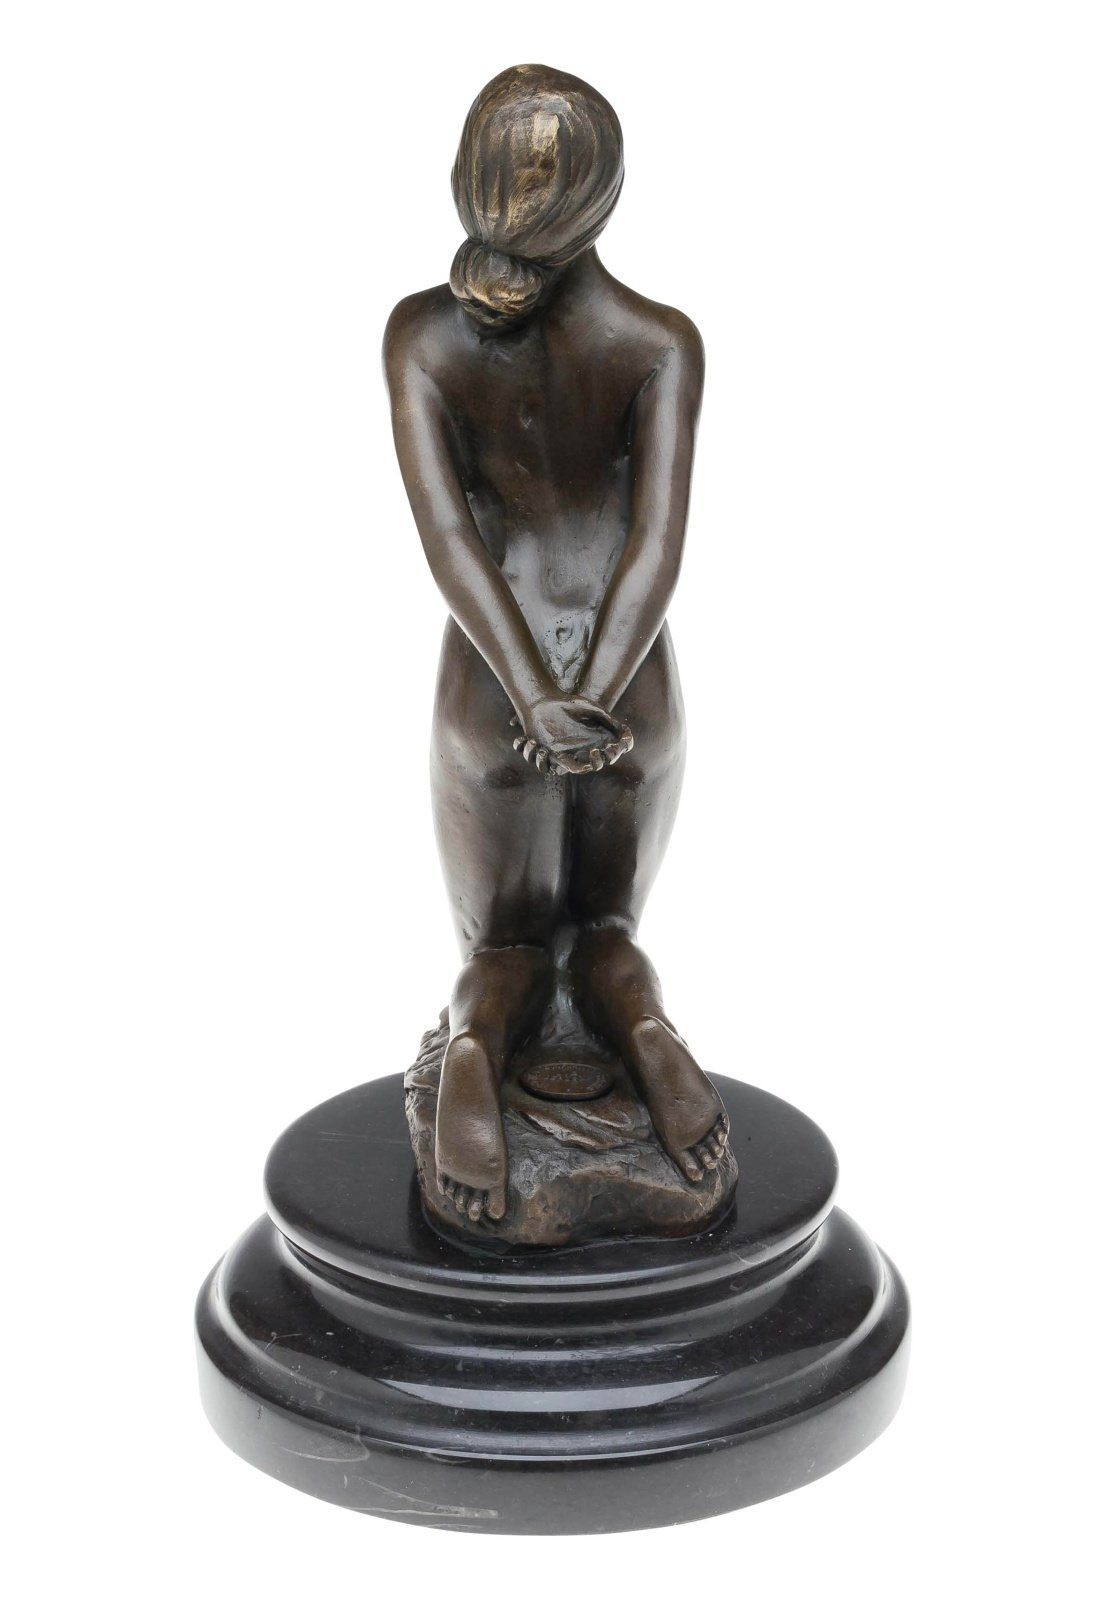 Figur Aubaho Erotik Frau Bronzeskulptur Skulptur Bronzefigur kniende Antik-Stil Bronze